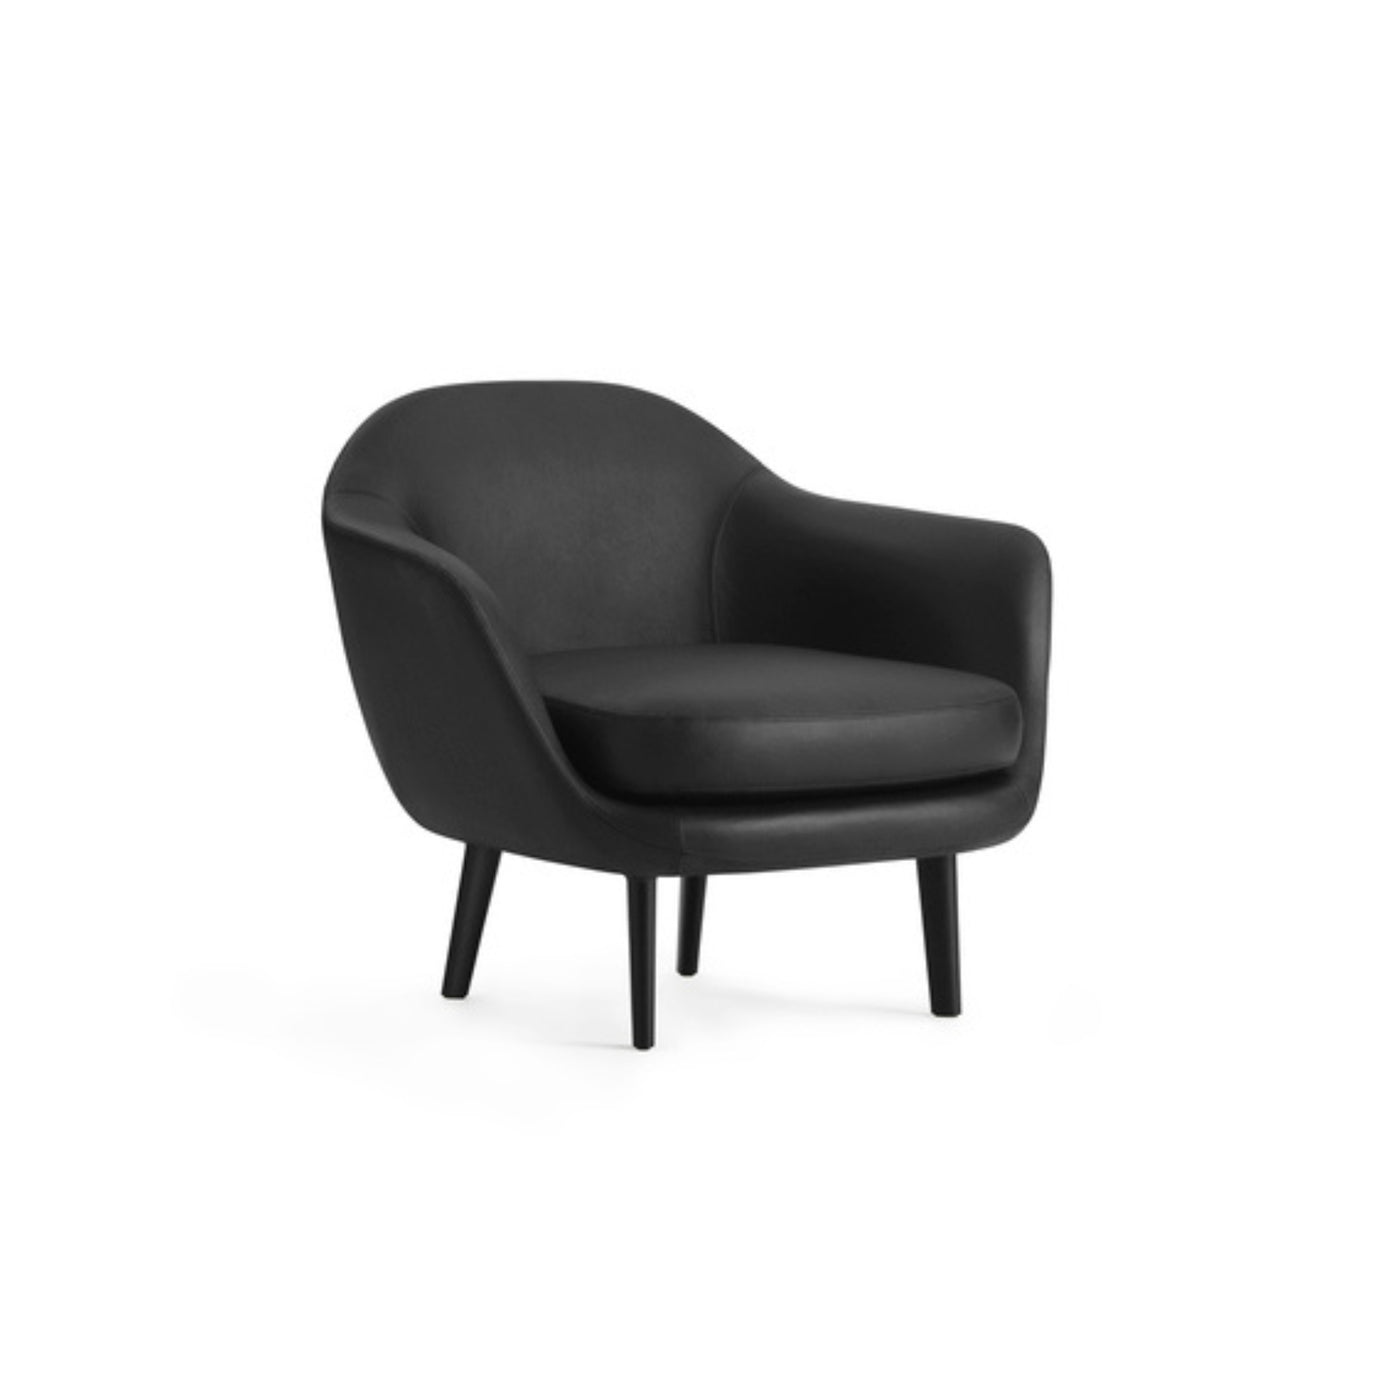 Normann Copenhagen Sum Armchair. Made to order at someday designs. #colour_ultra-black-41599